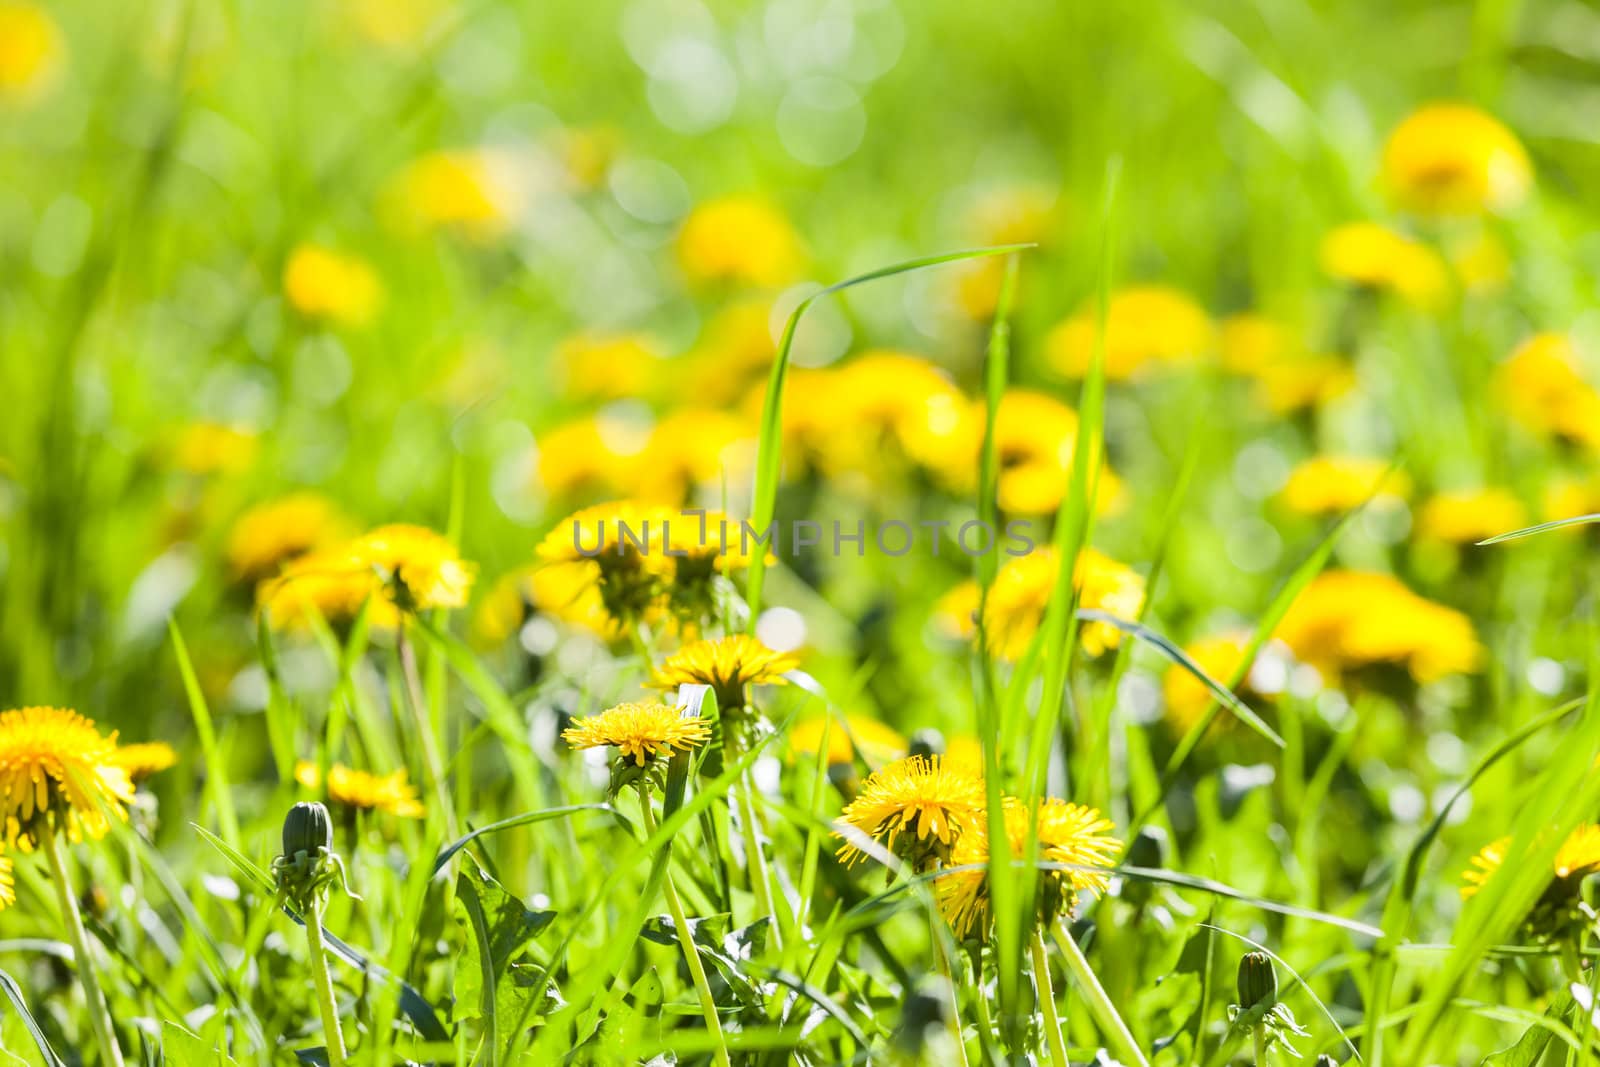 Green spring nature - yellow dandelion flowers field in bloom